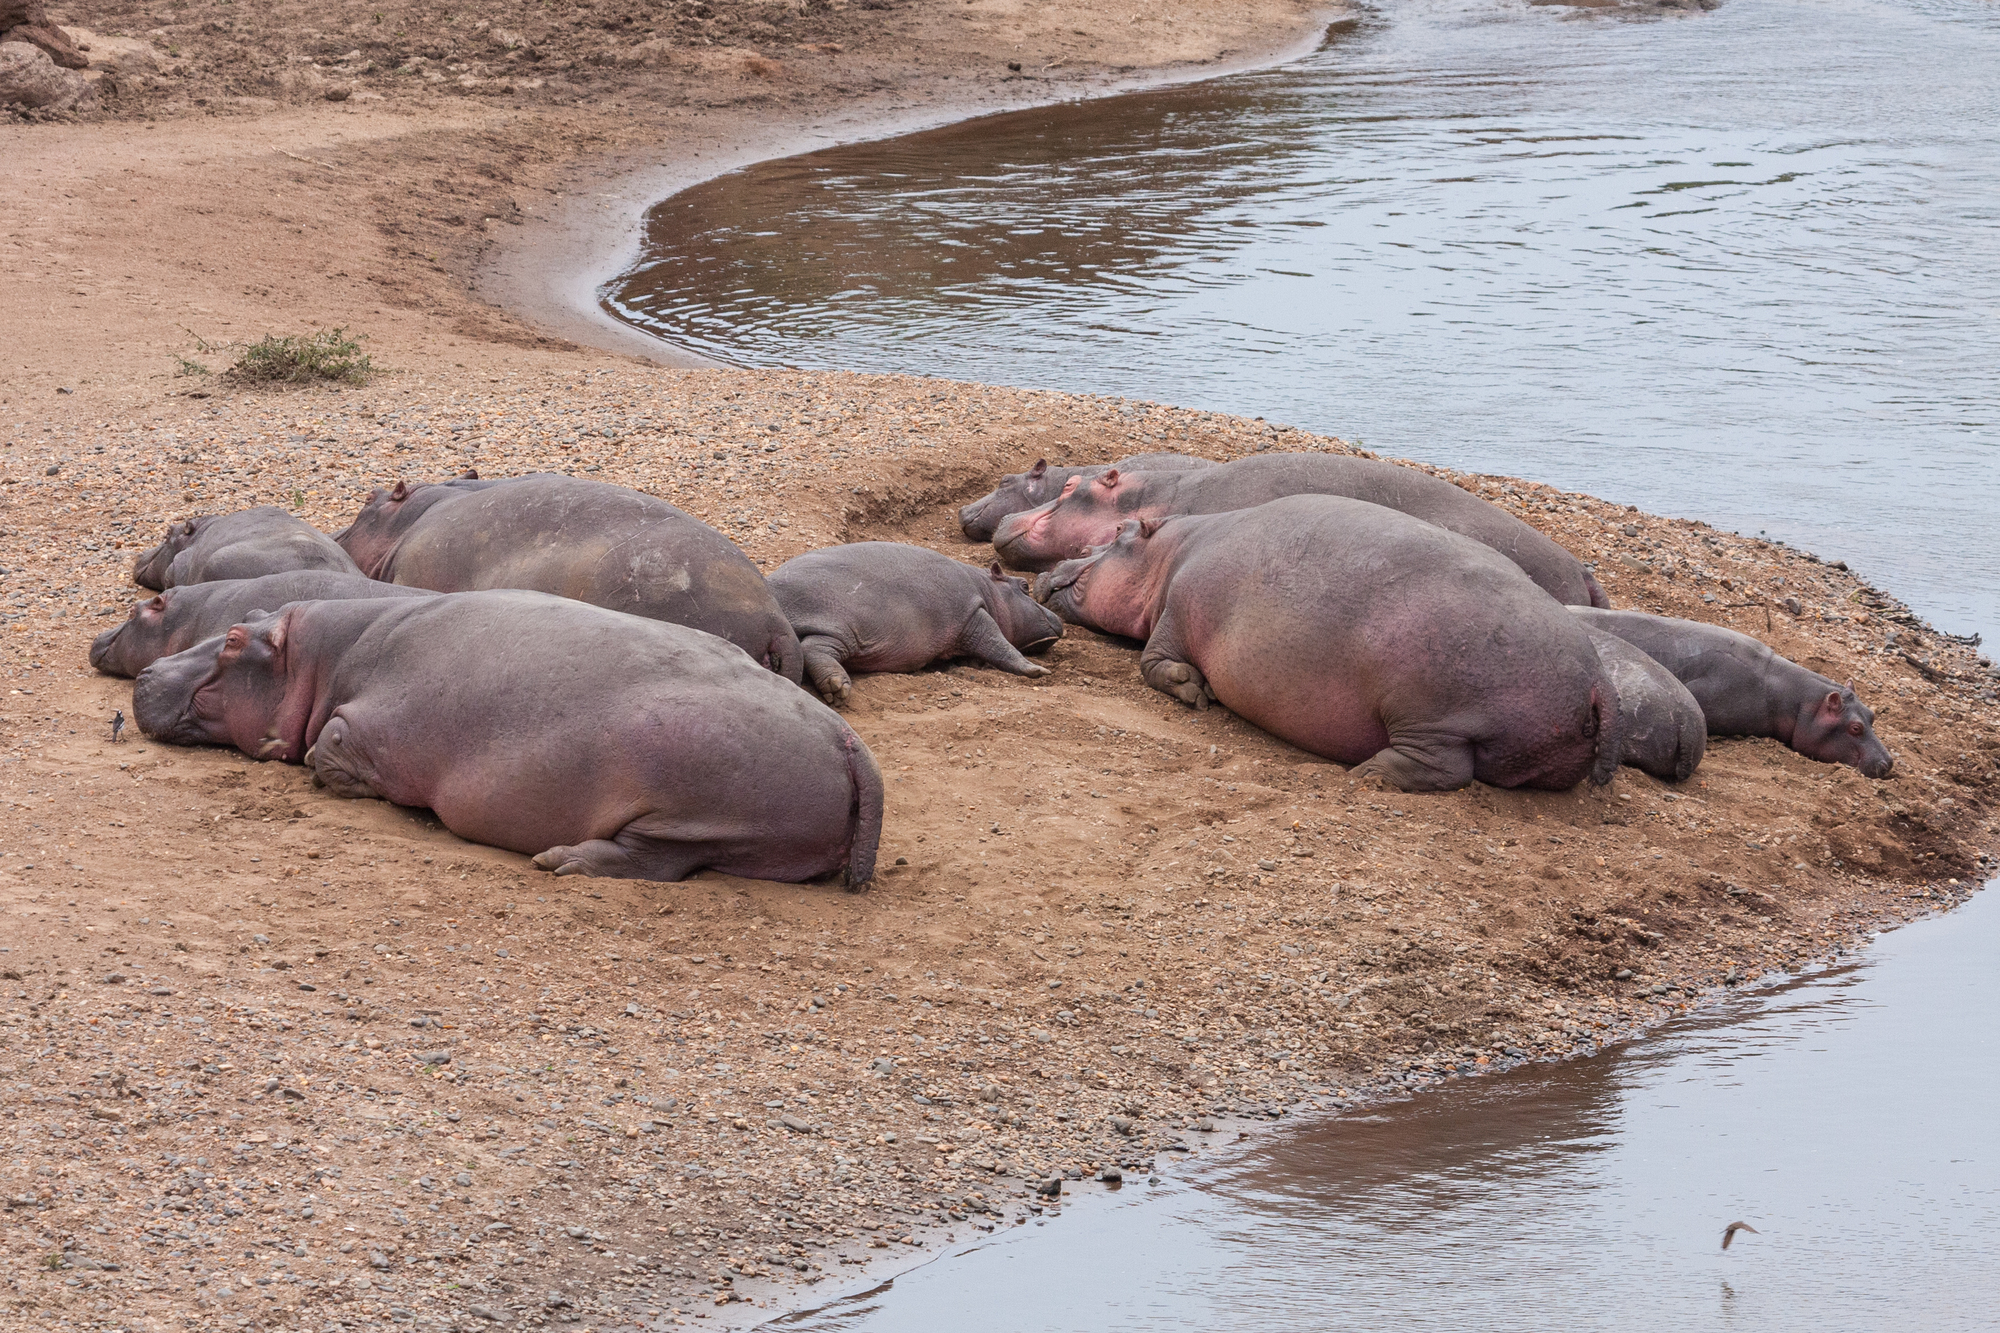 Hippos on the shores of the Mara River in Masai Mara, Kenya. Image credit: Courtesy of Grégoire Dubois